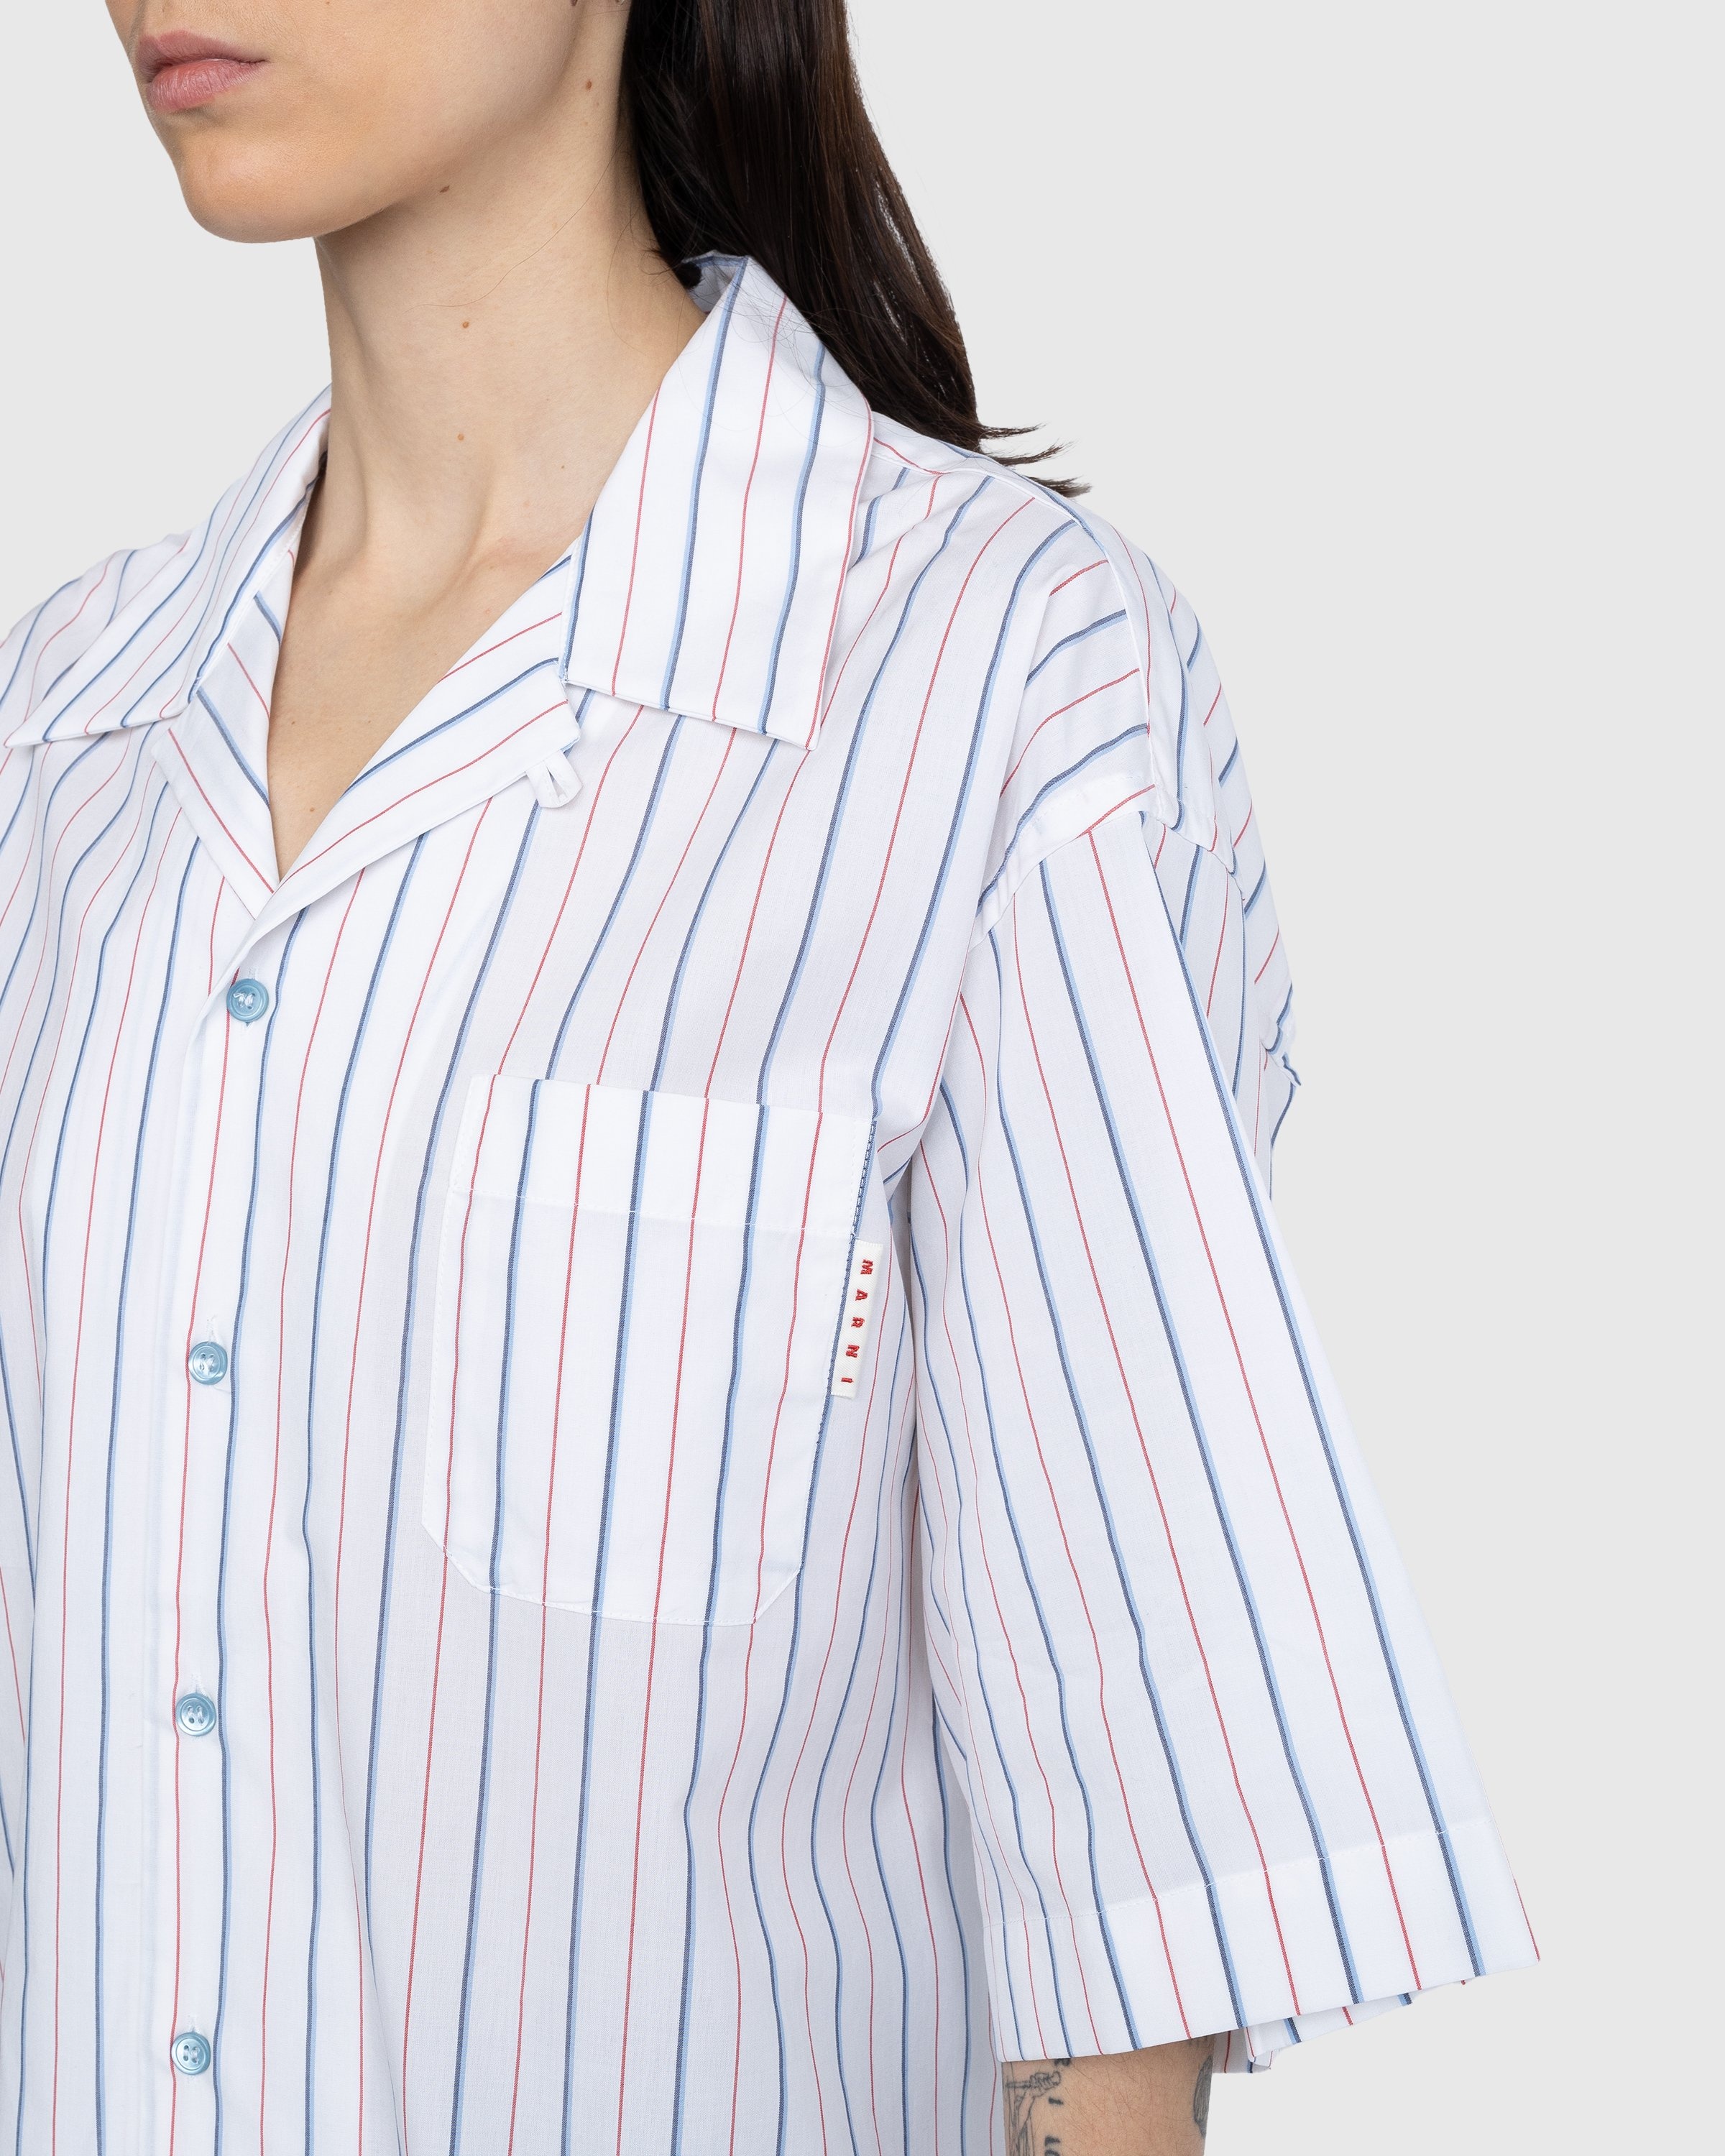 Marni – Striped Button-Up Shirt White - Shirts - White - Image 6